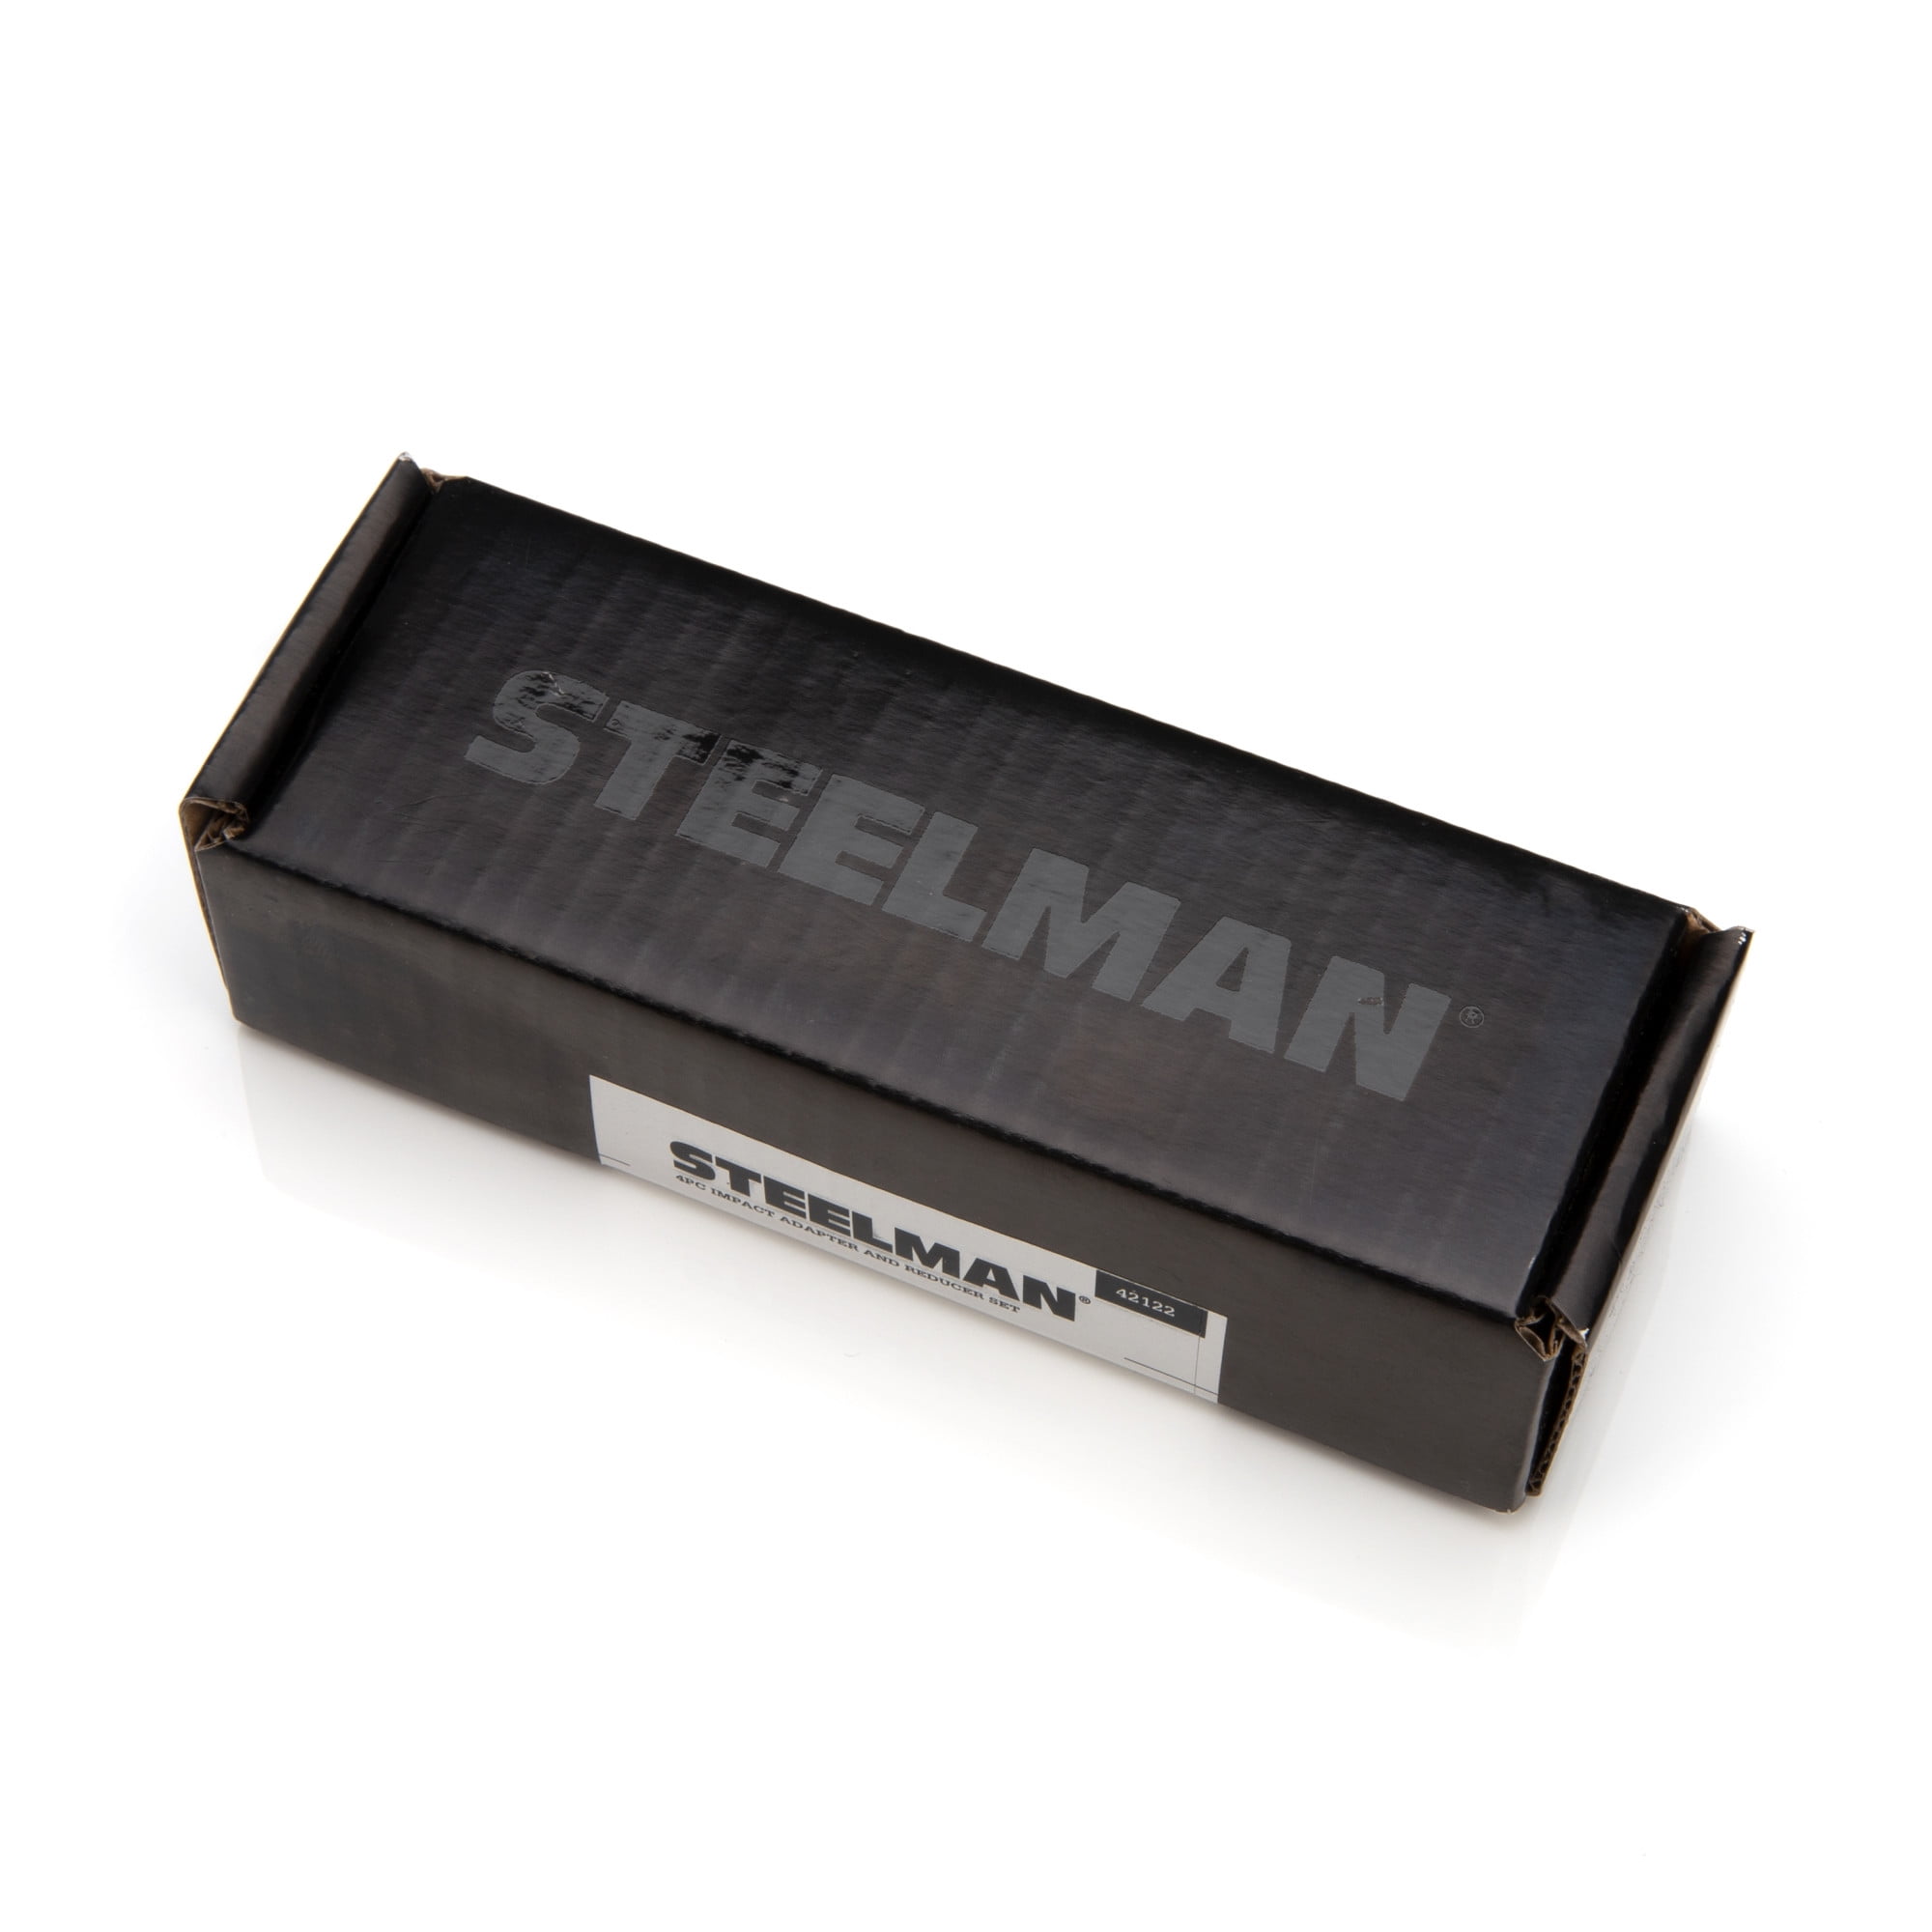 Steelman 4 Piece Impact Adapter and Reducer Set 42122